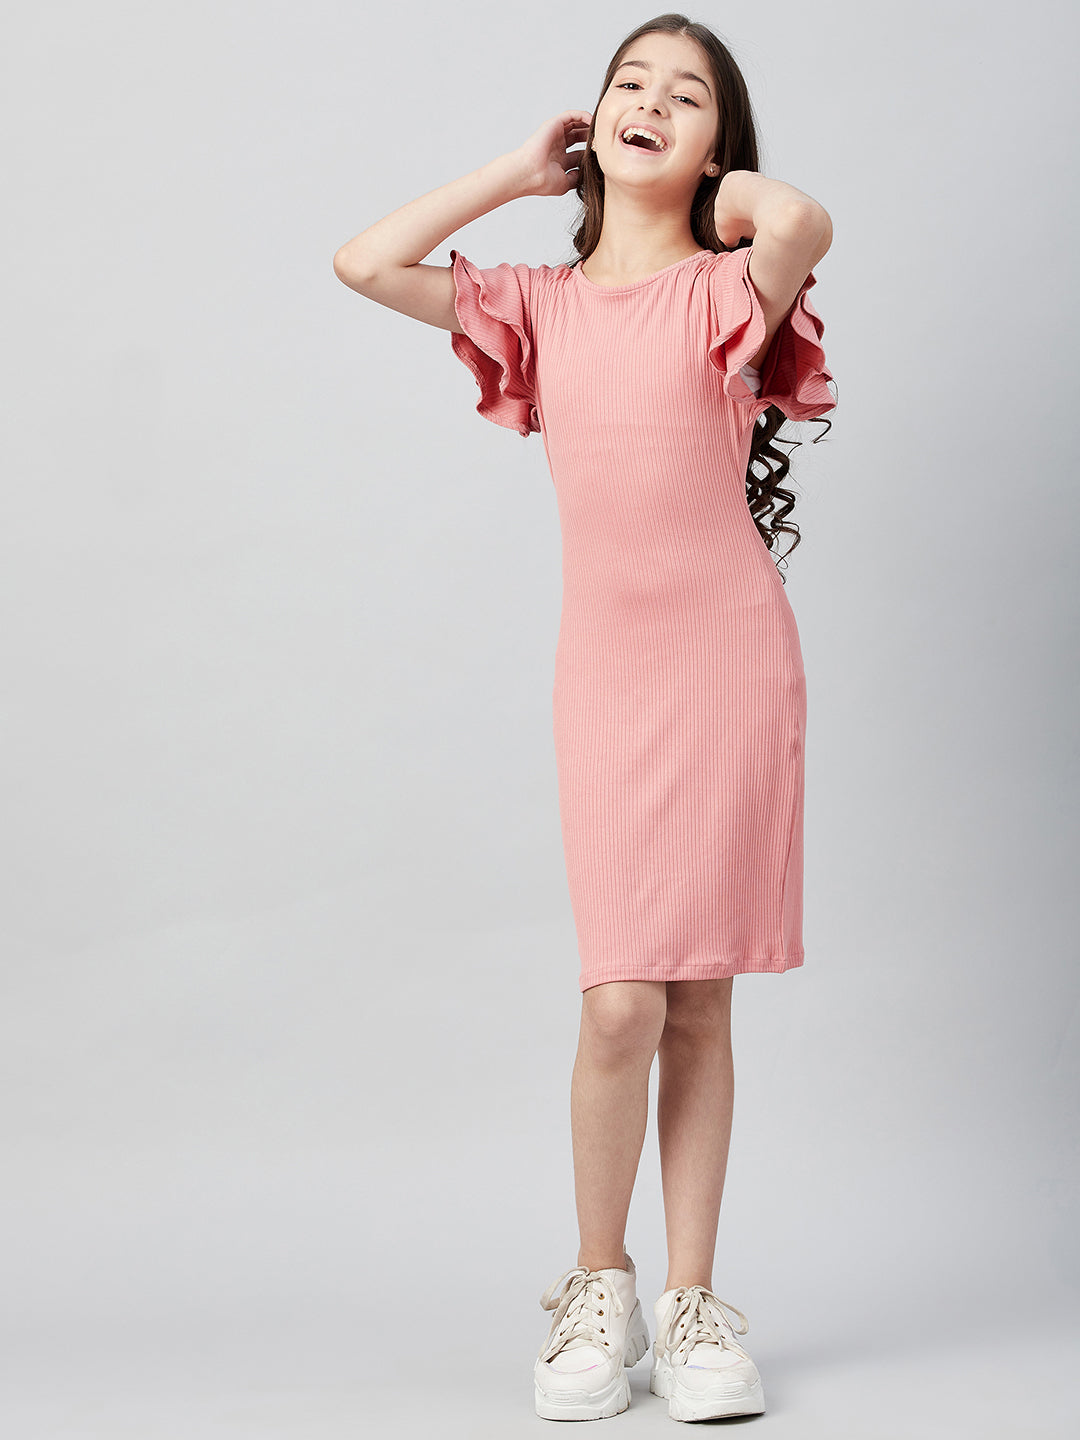 Athena Girl Pink Sheath Dress - Athena Lifestyle